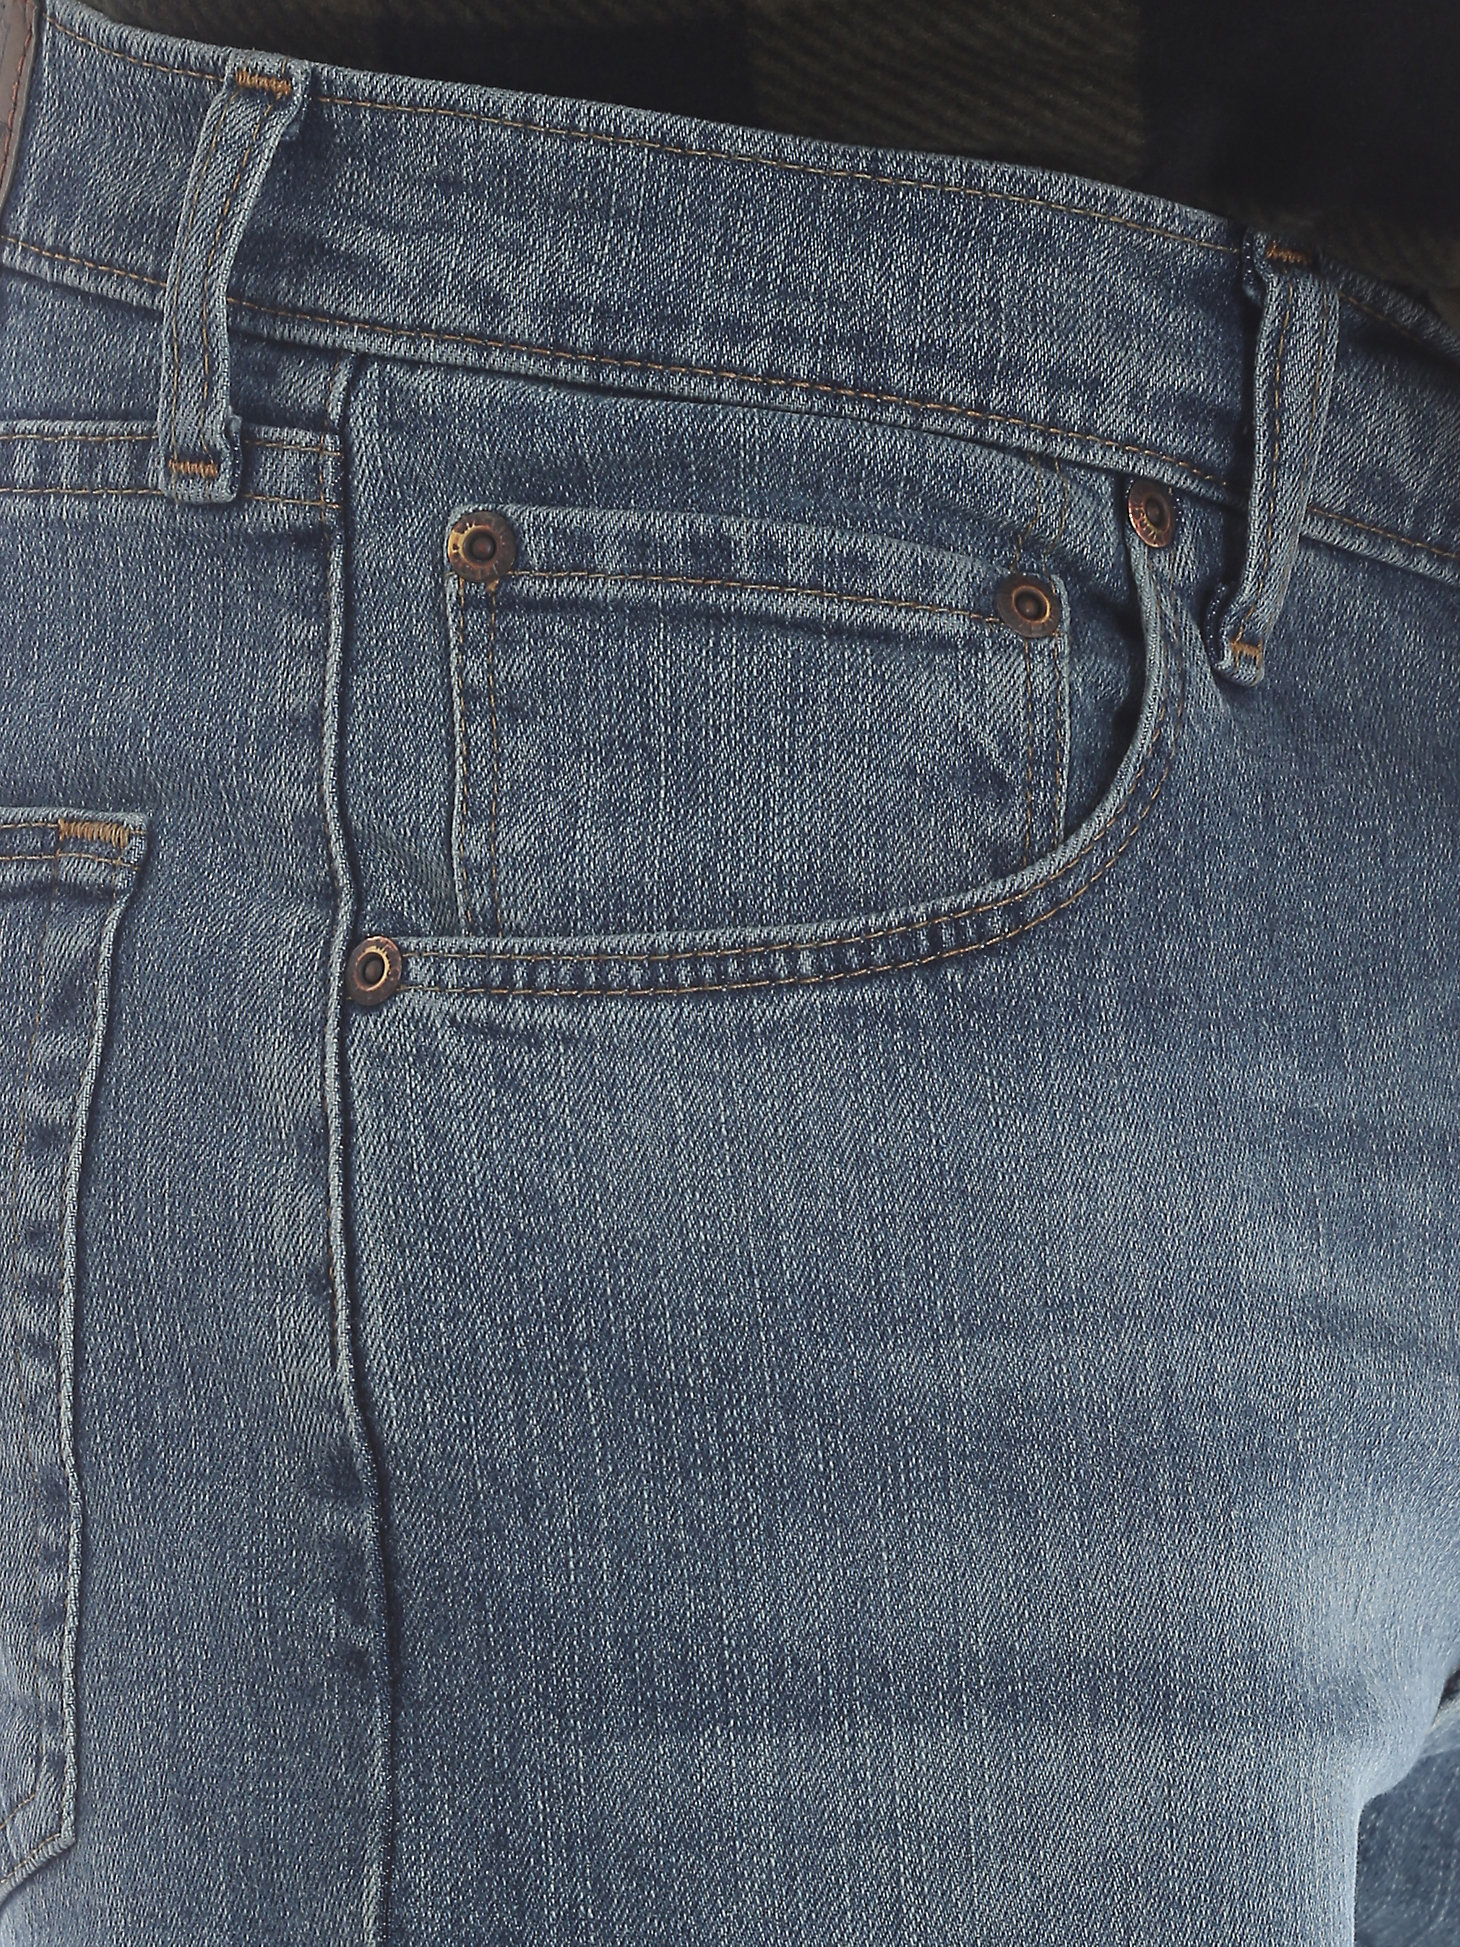 Wrangler® Five Star Premium Denim Flex For Comfort Straight Fit Jean in Tombstone alternative view 4